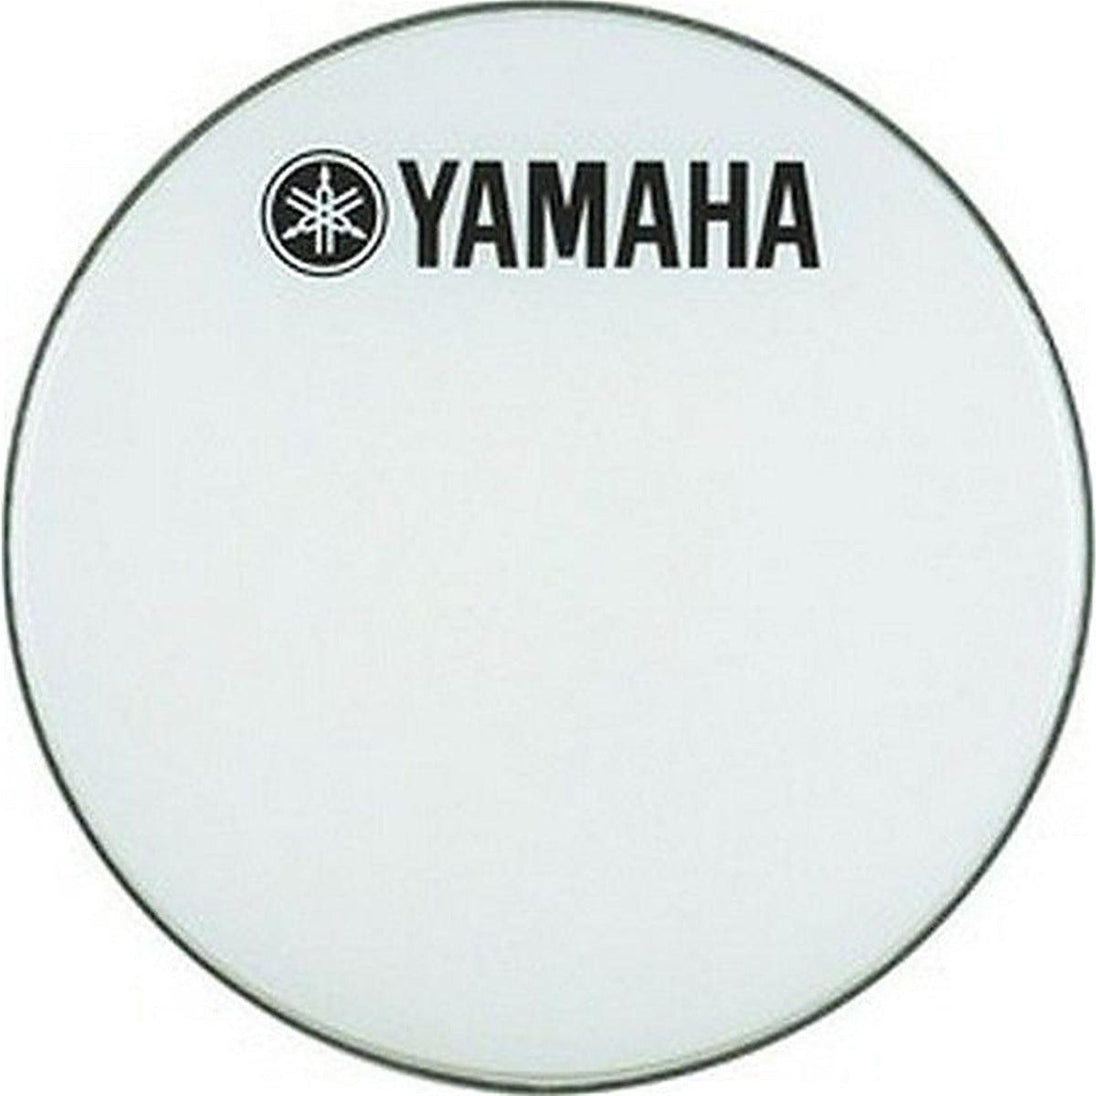 Yamaha 18" Logoed Marching Bass Drum Head | DHBR1218